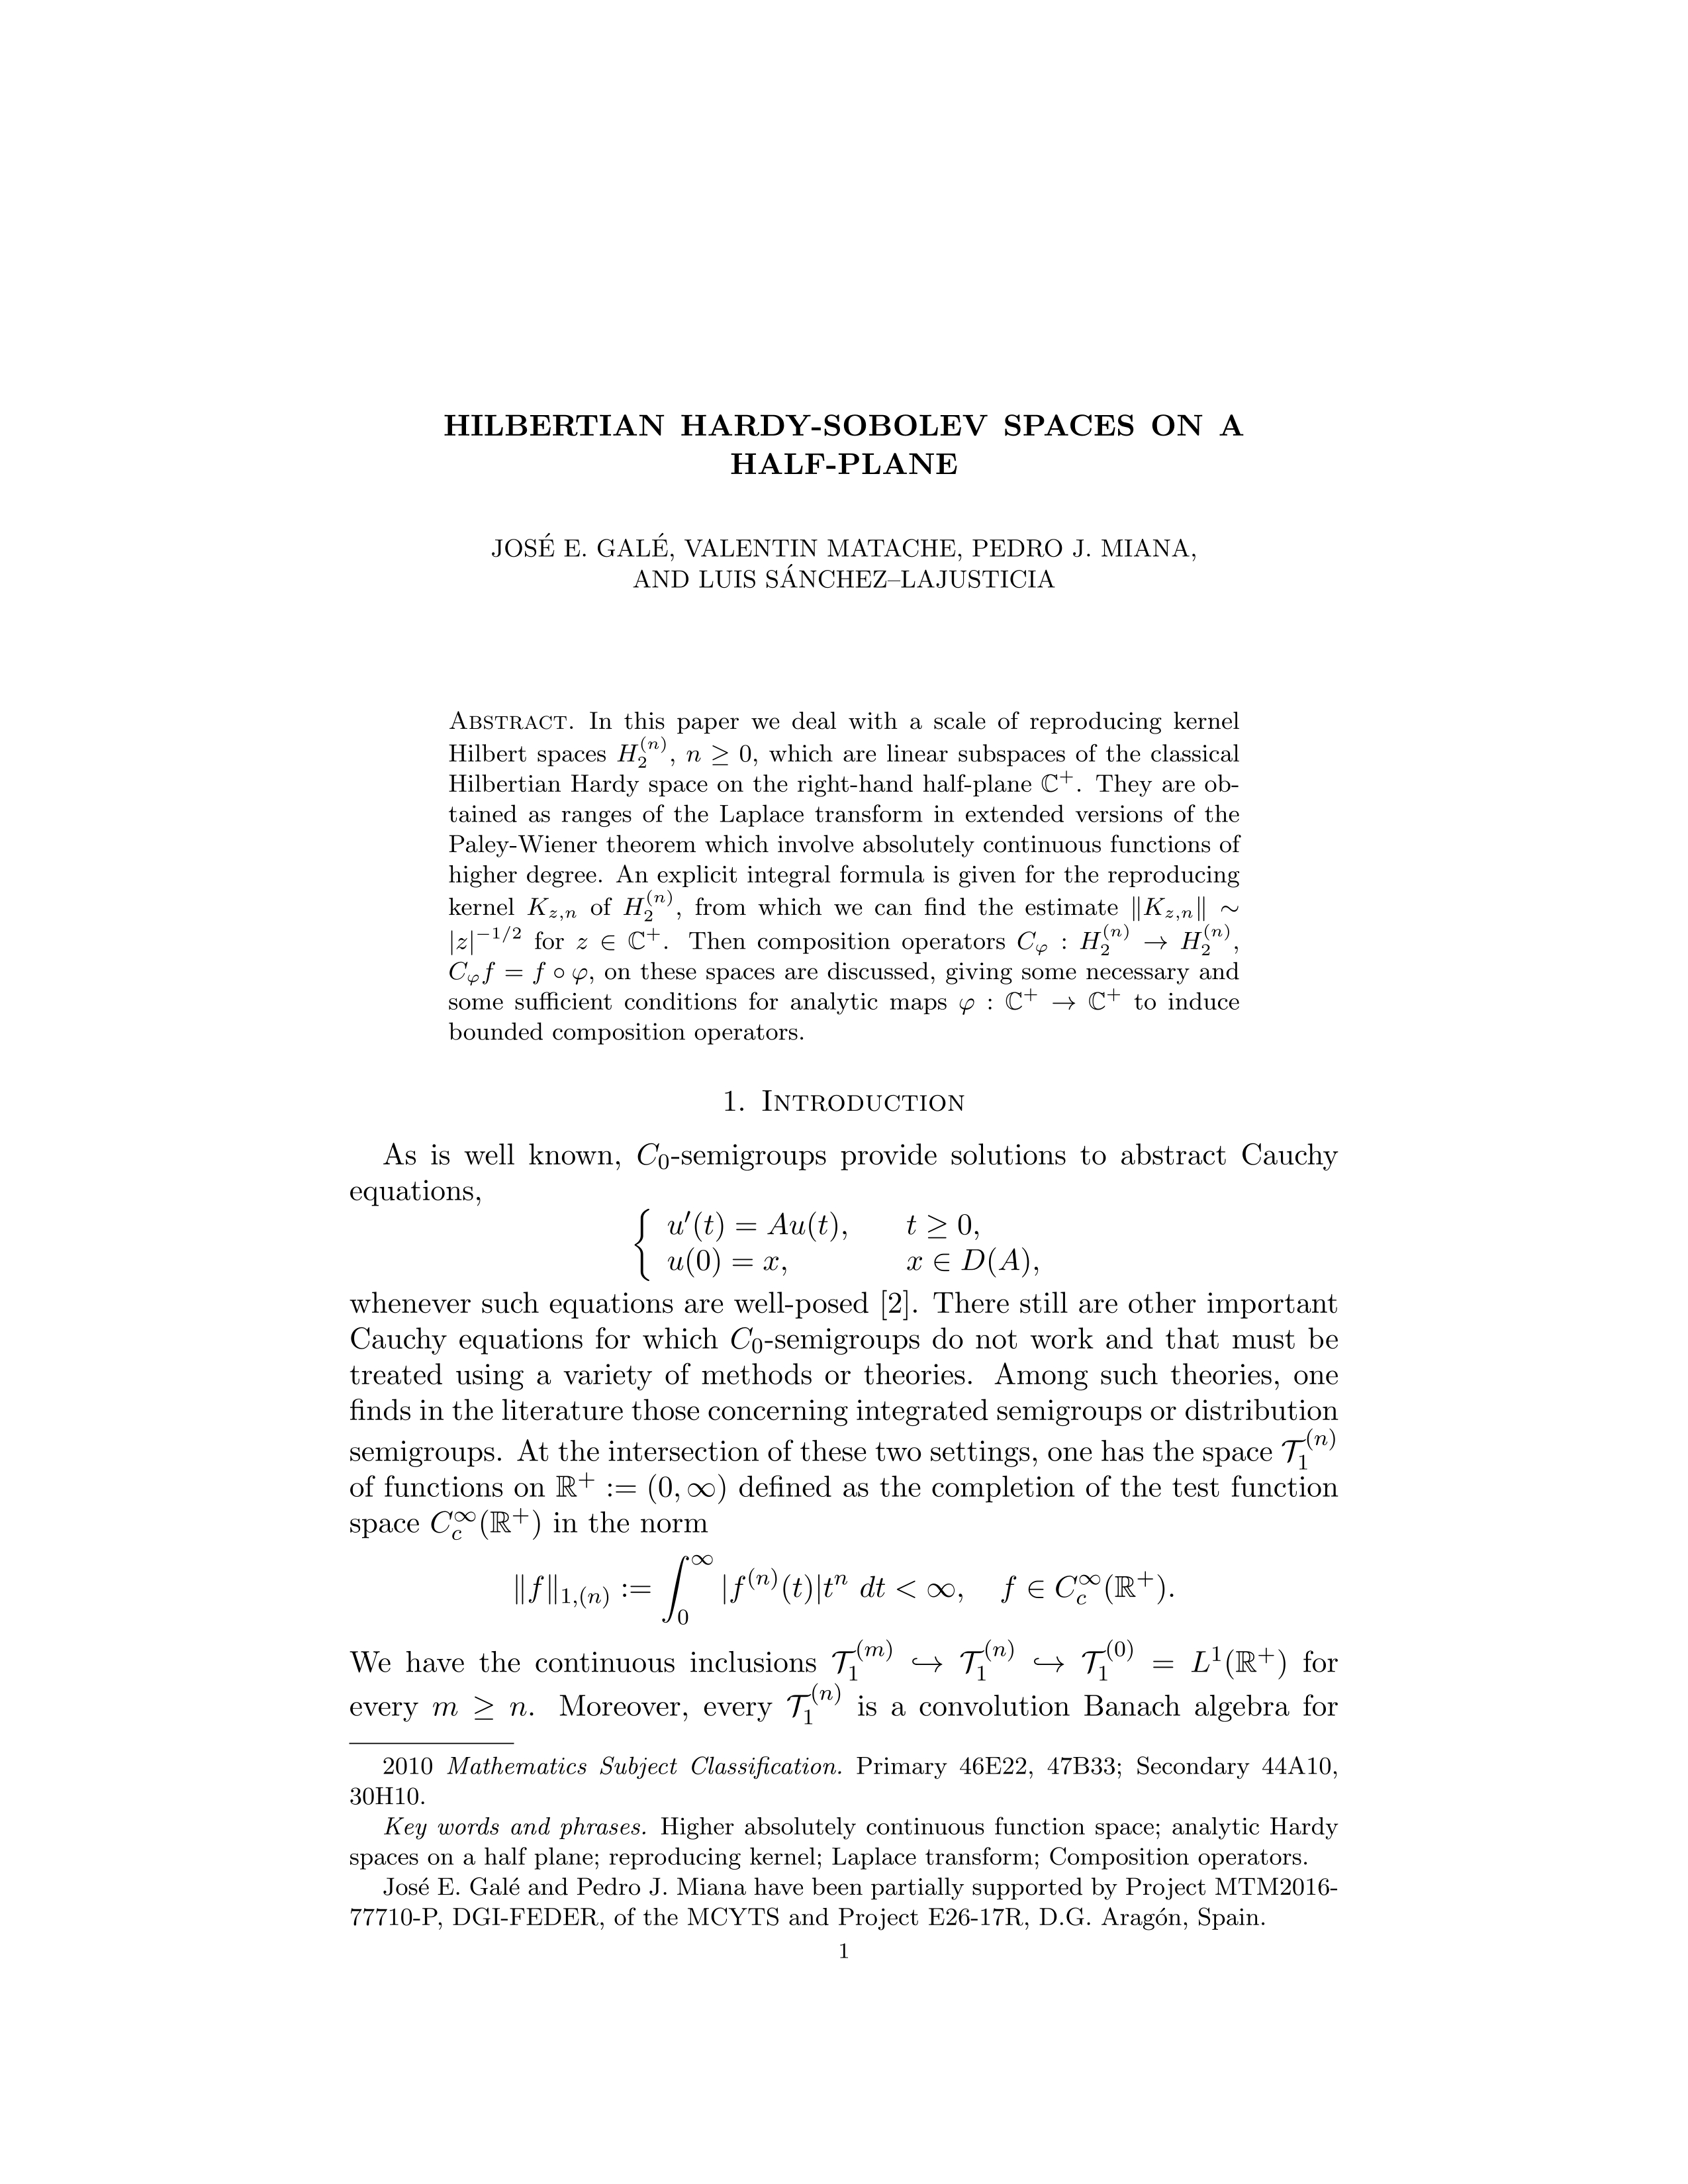 Hilbertian Hardy-Sobolev spaces on a half-plane